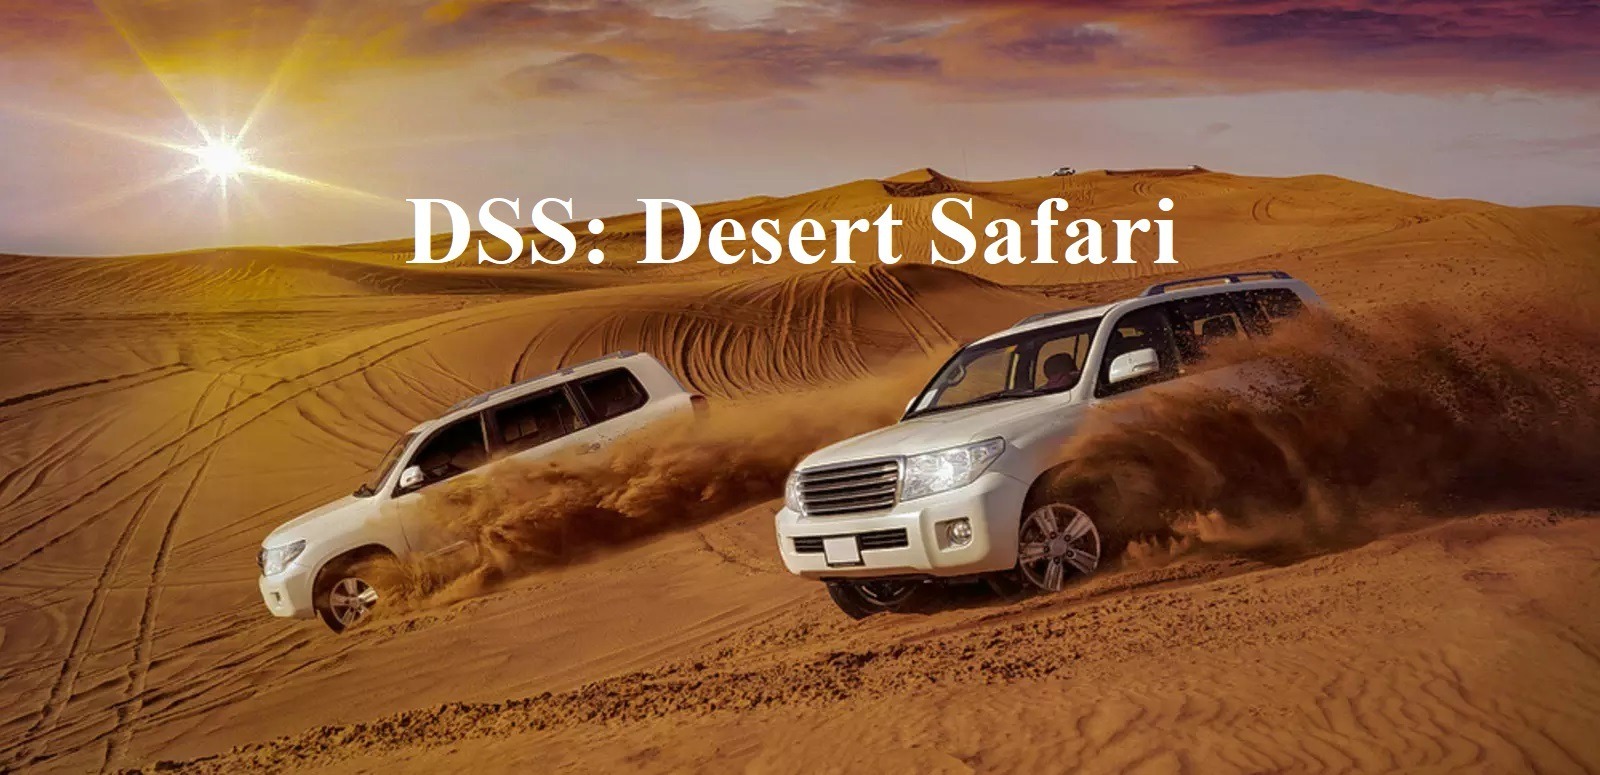 DSS: Desert Safari - Coming Soon in UAE